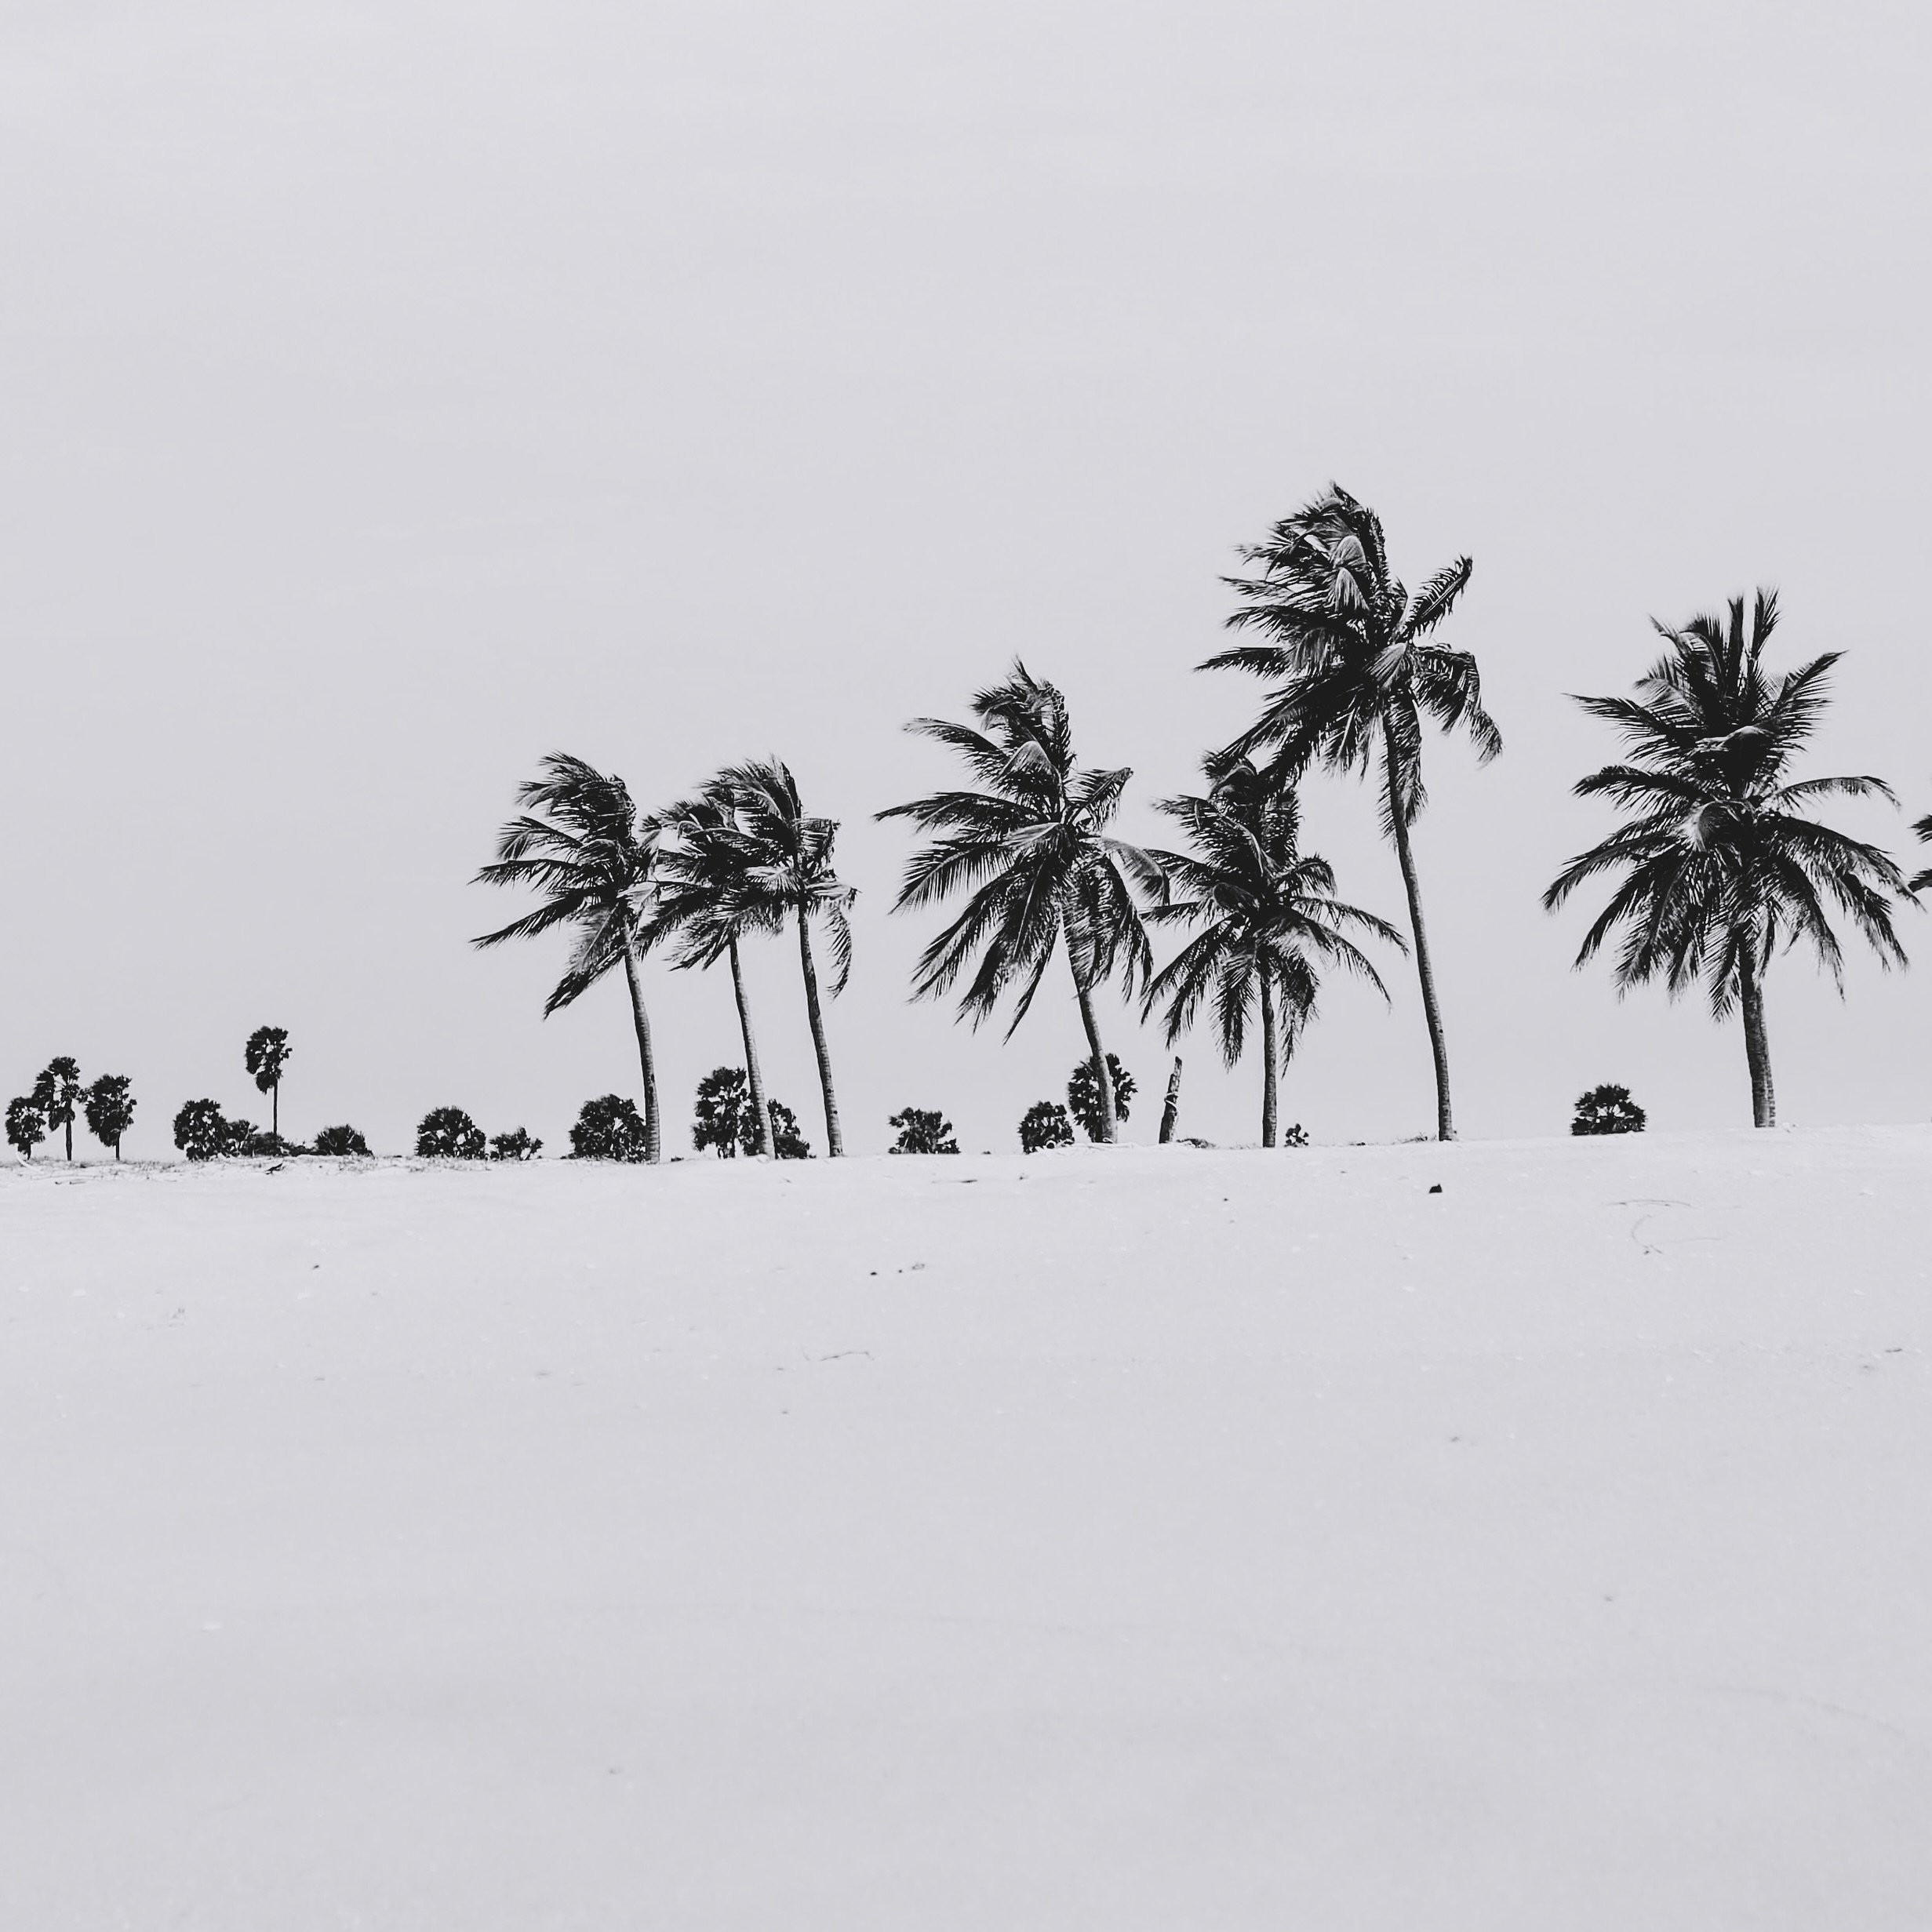 Negative ~ space 🌞

#palmtreephotography #palmtrees #palmtreeporn #palmtreeseverywhere